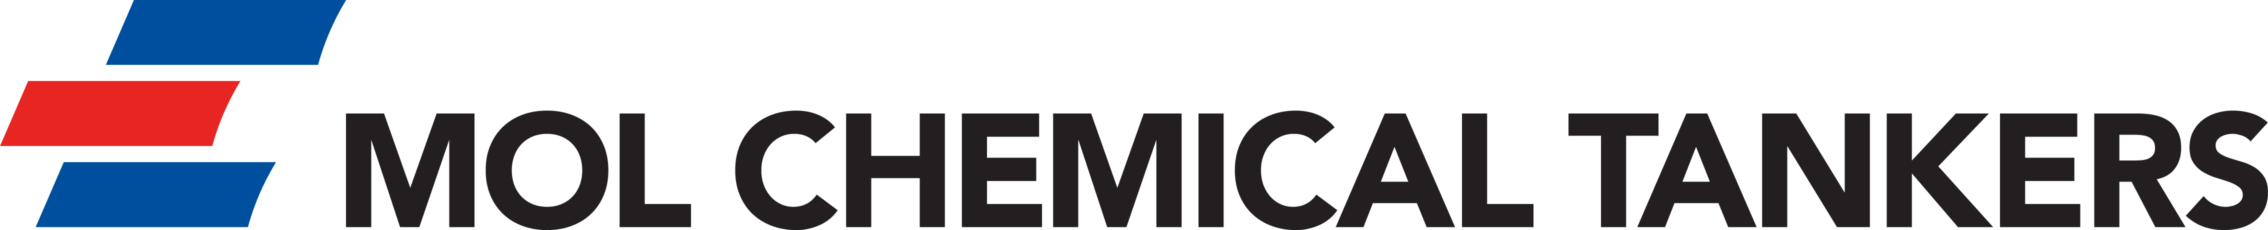 Mol Chem Tanker Logo R